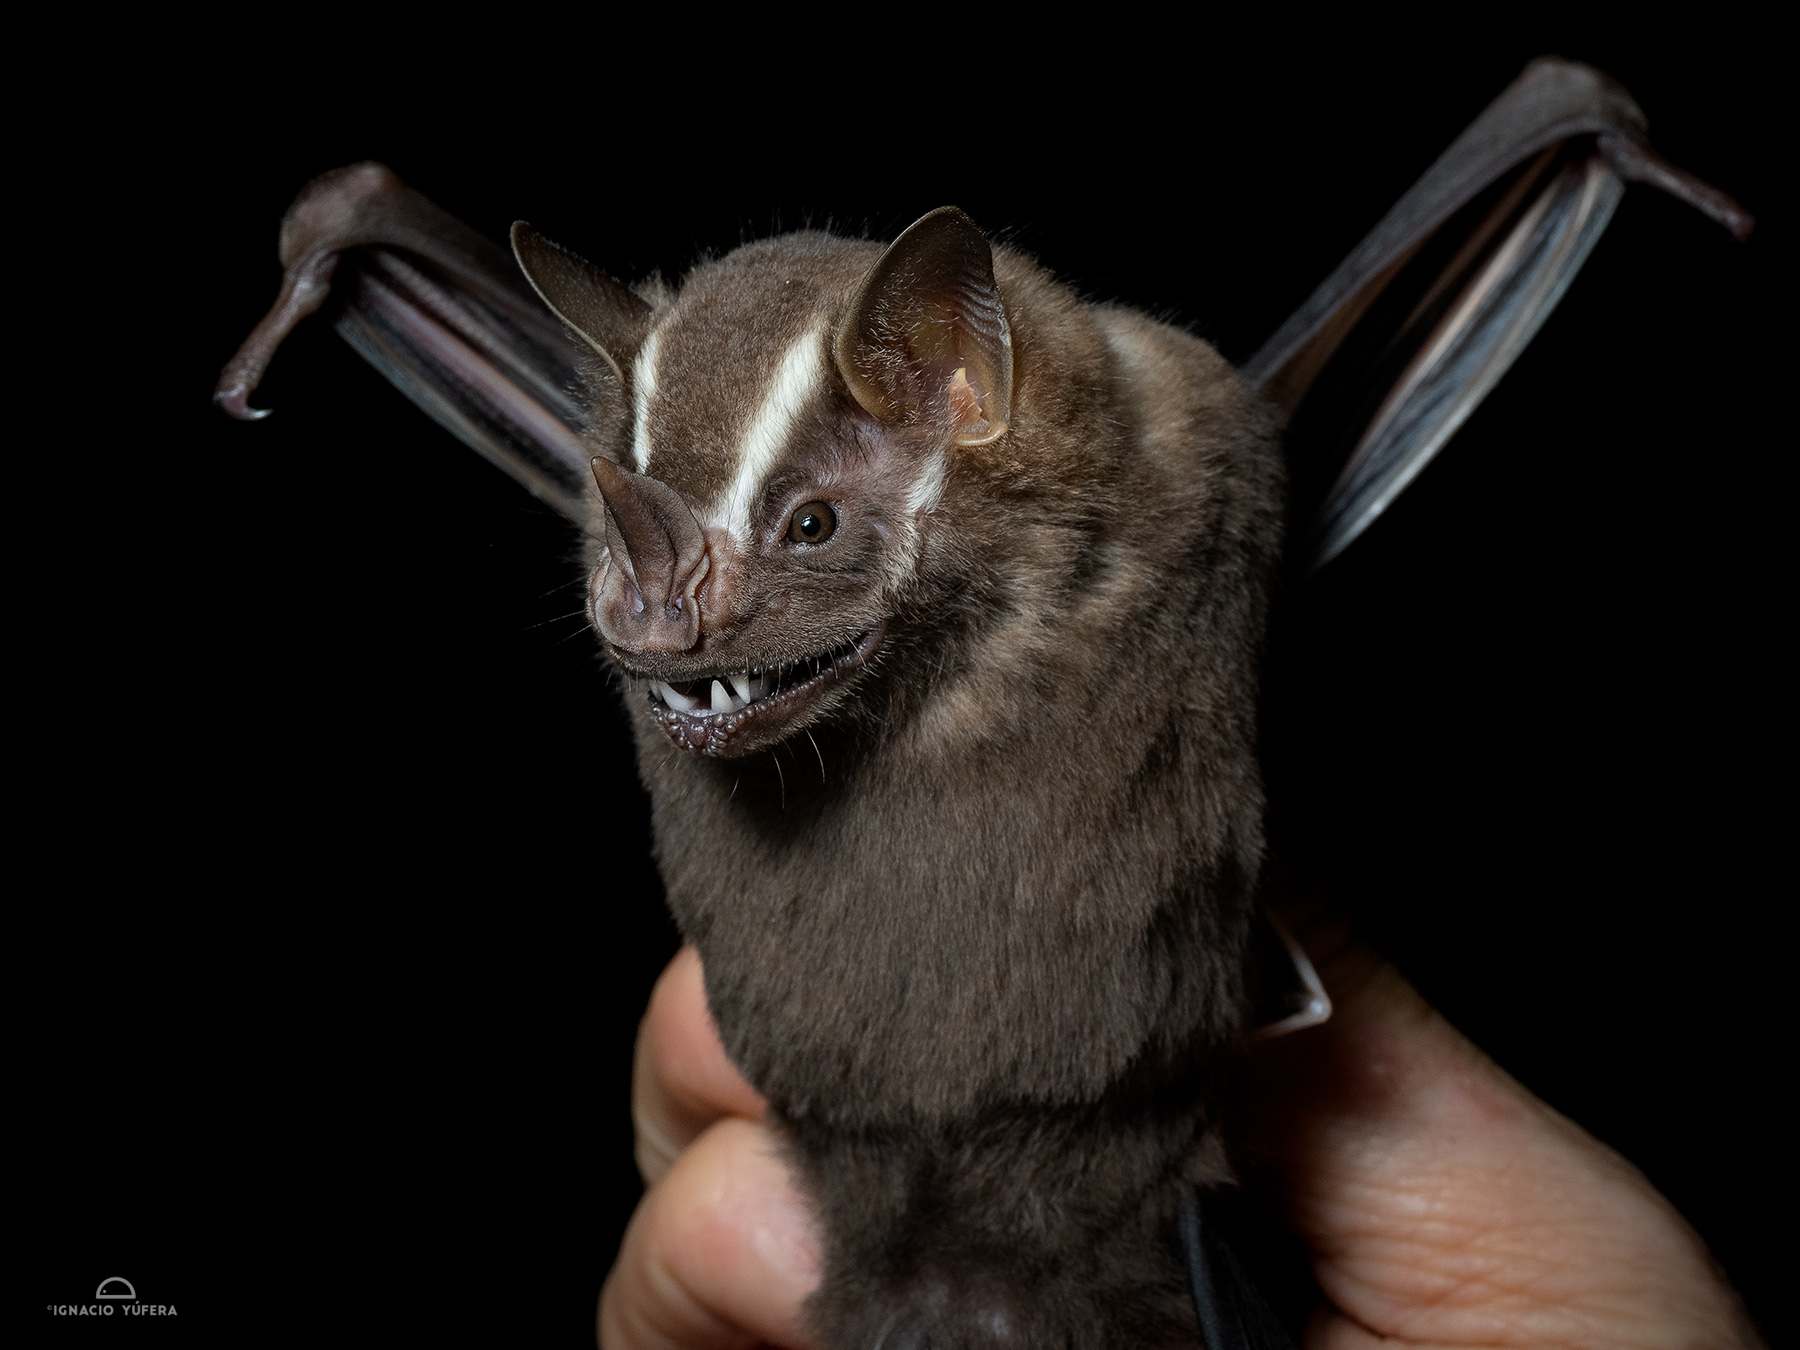 Greater Fruit-eating Bat (Artibeus lituratus), Madre de Dios, Peru